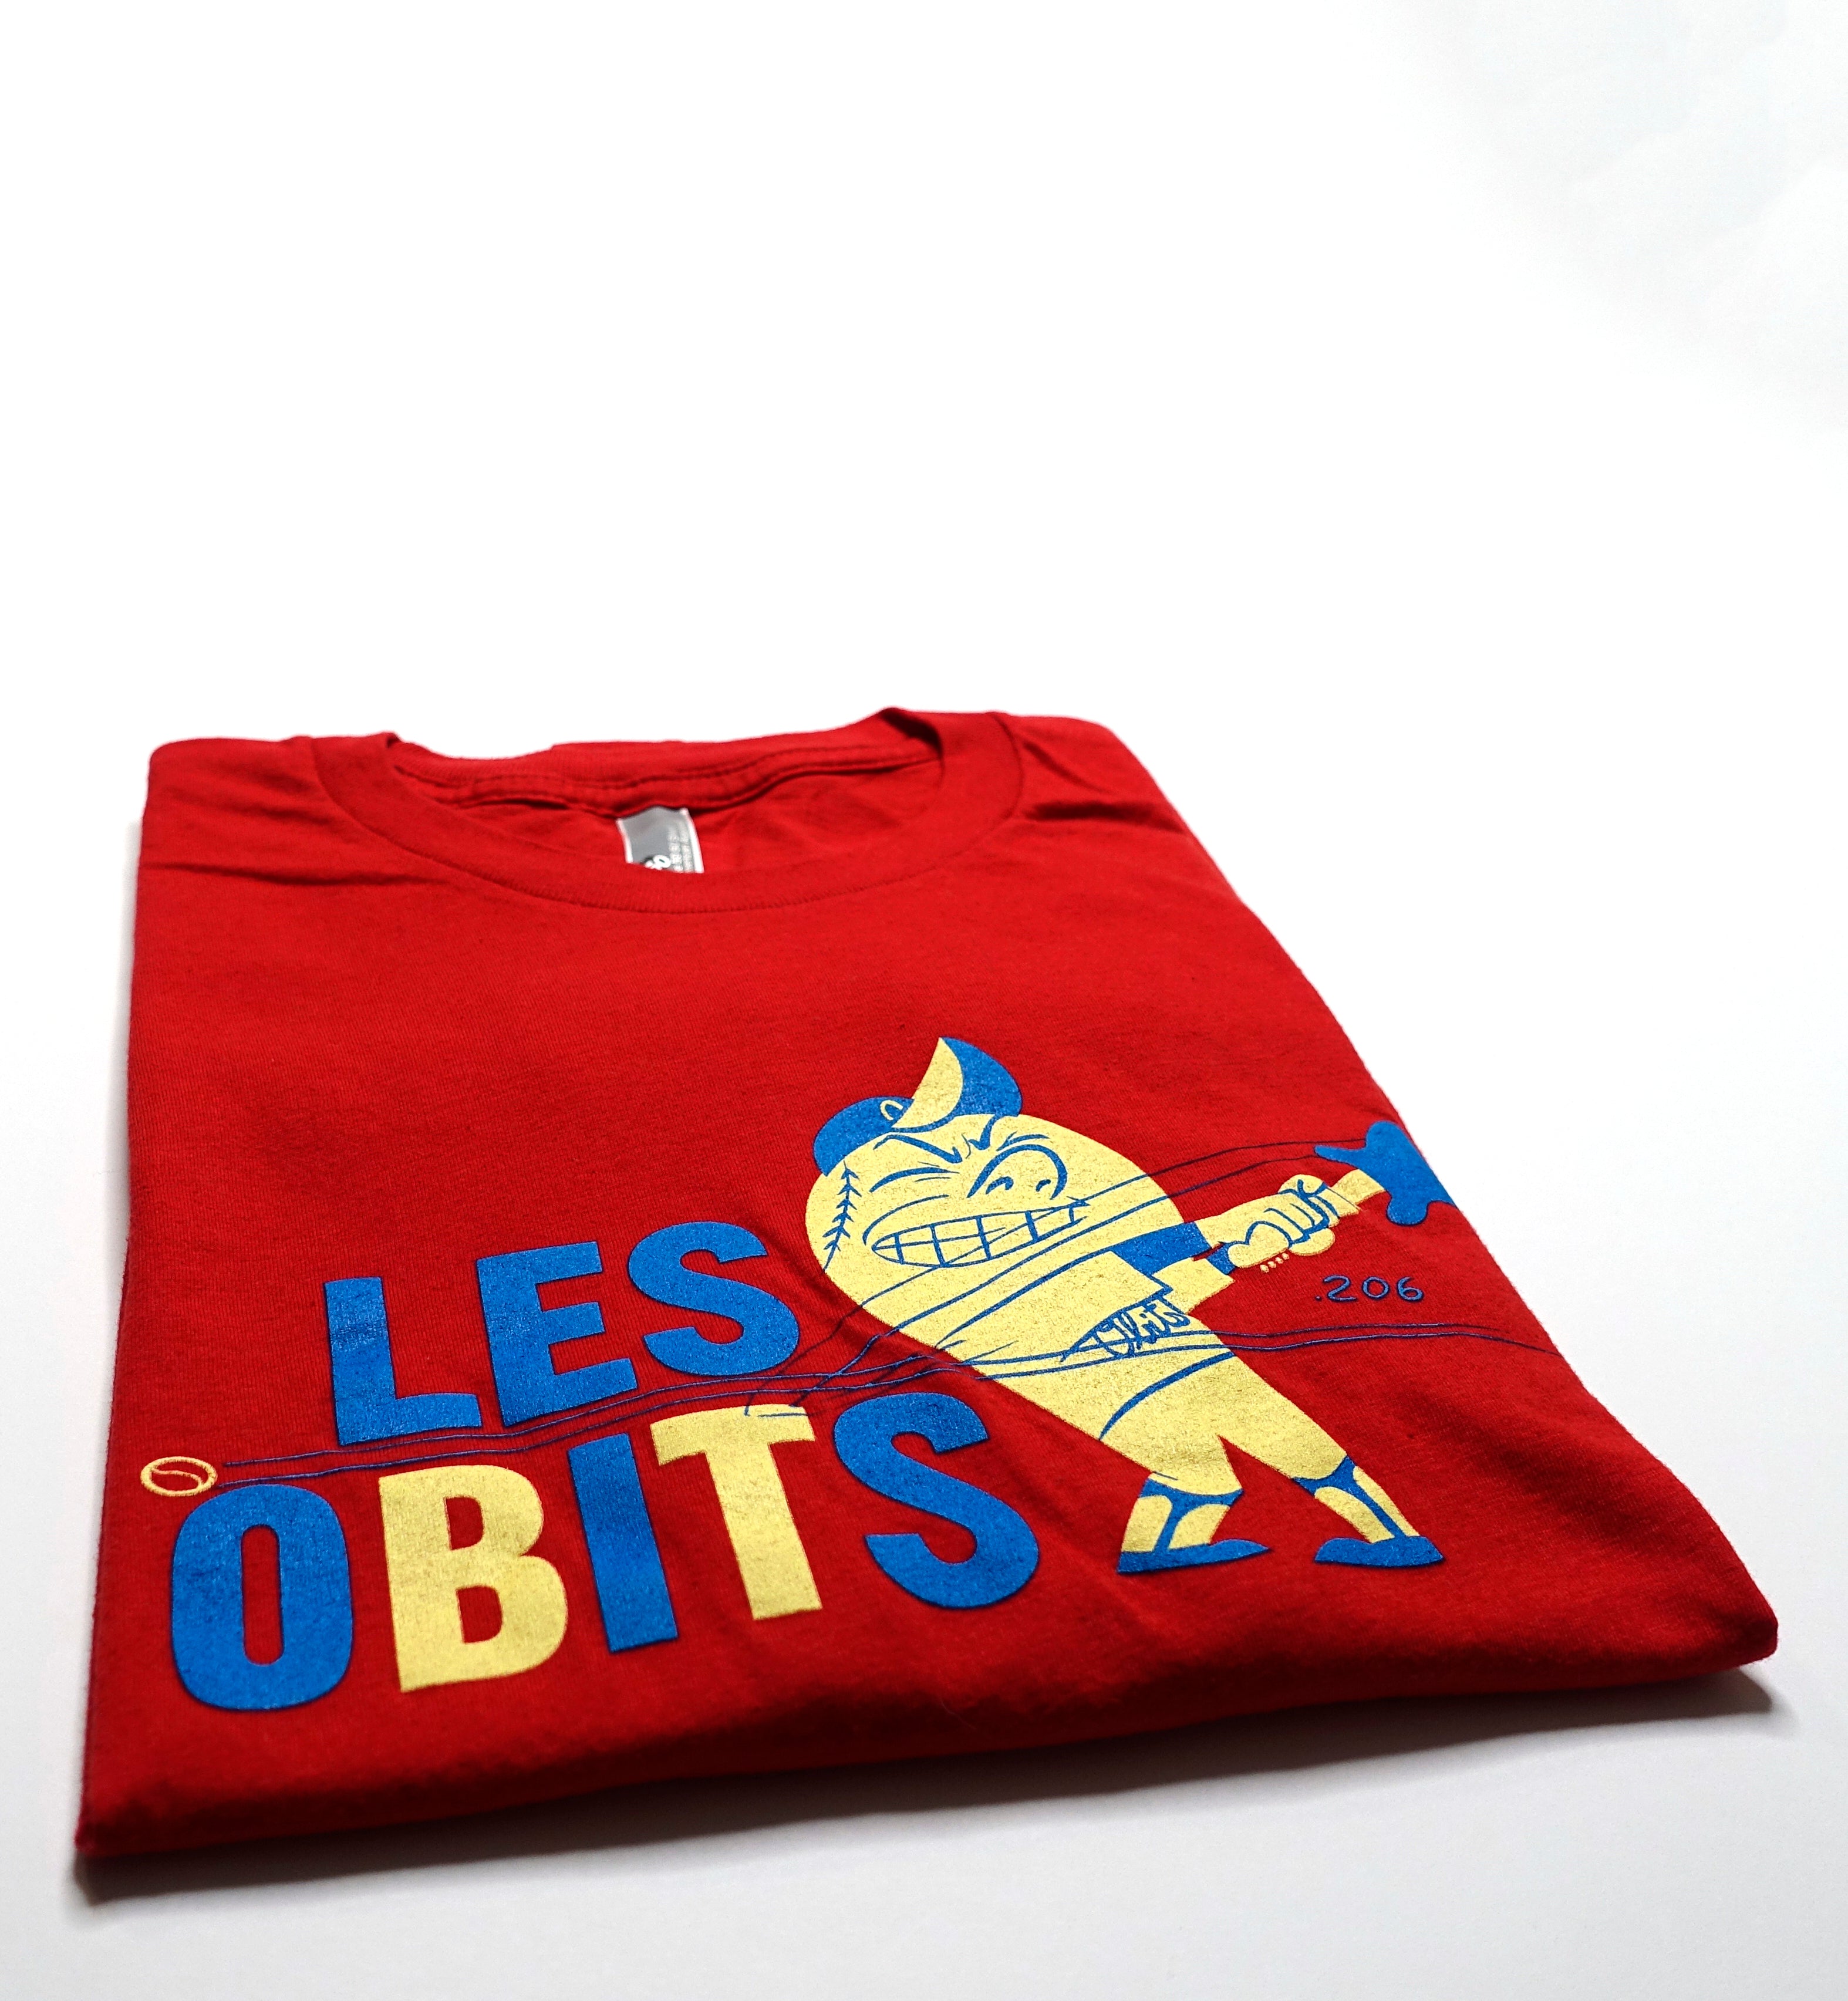 Obits - LES Obits Baseball Man Tour Shirt Size XL